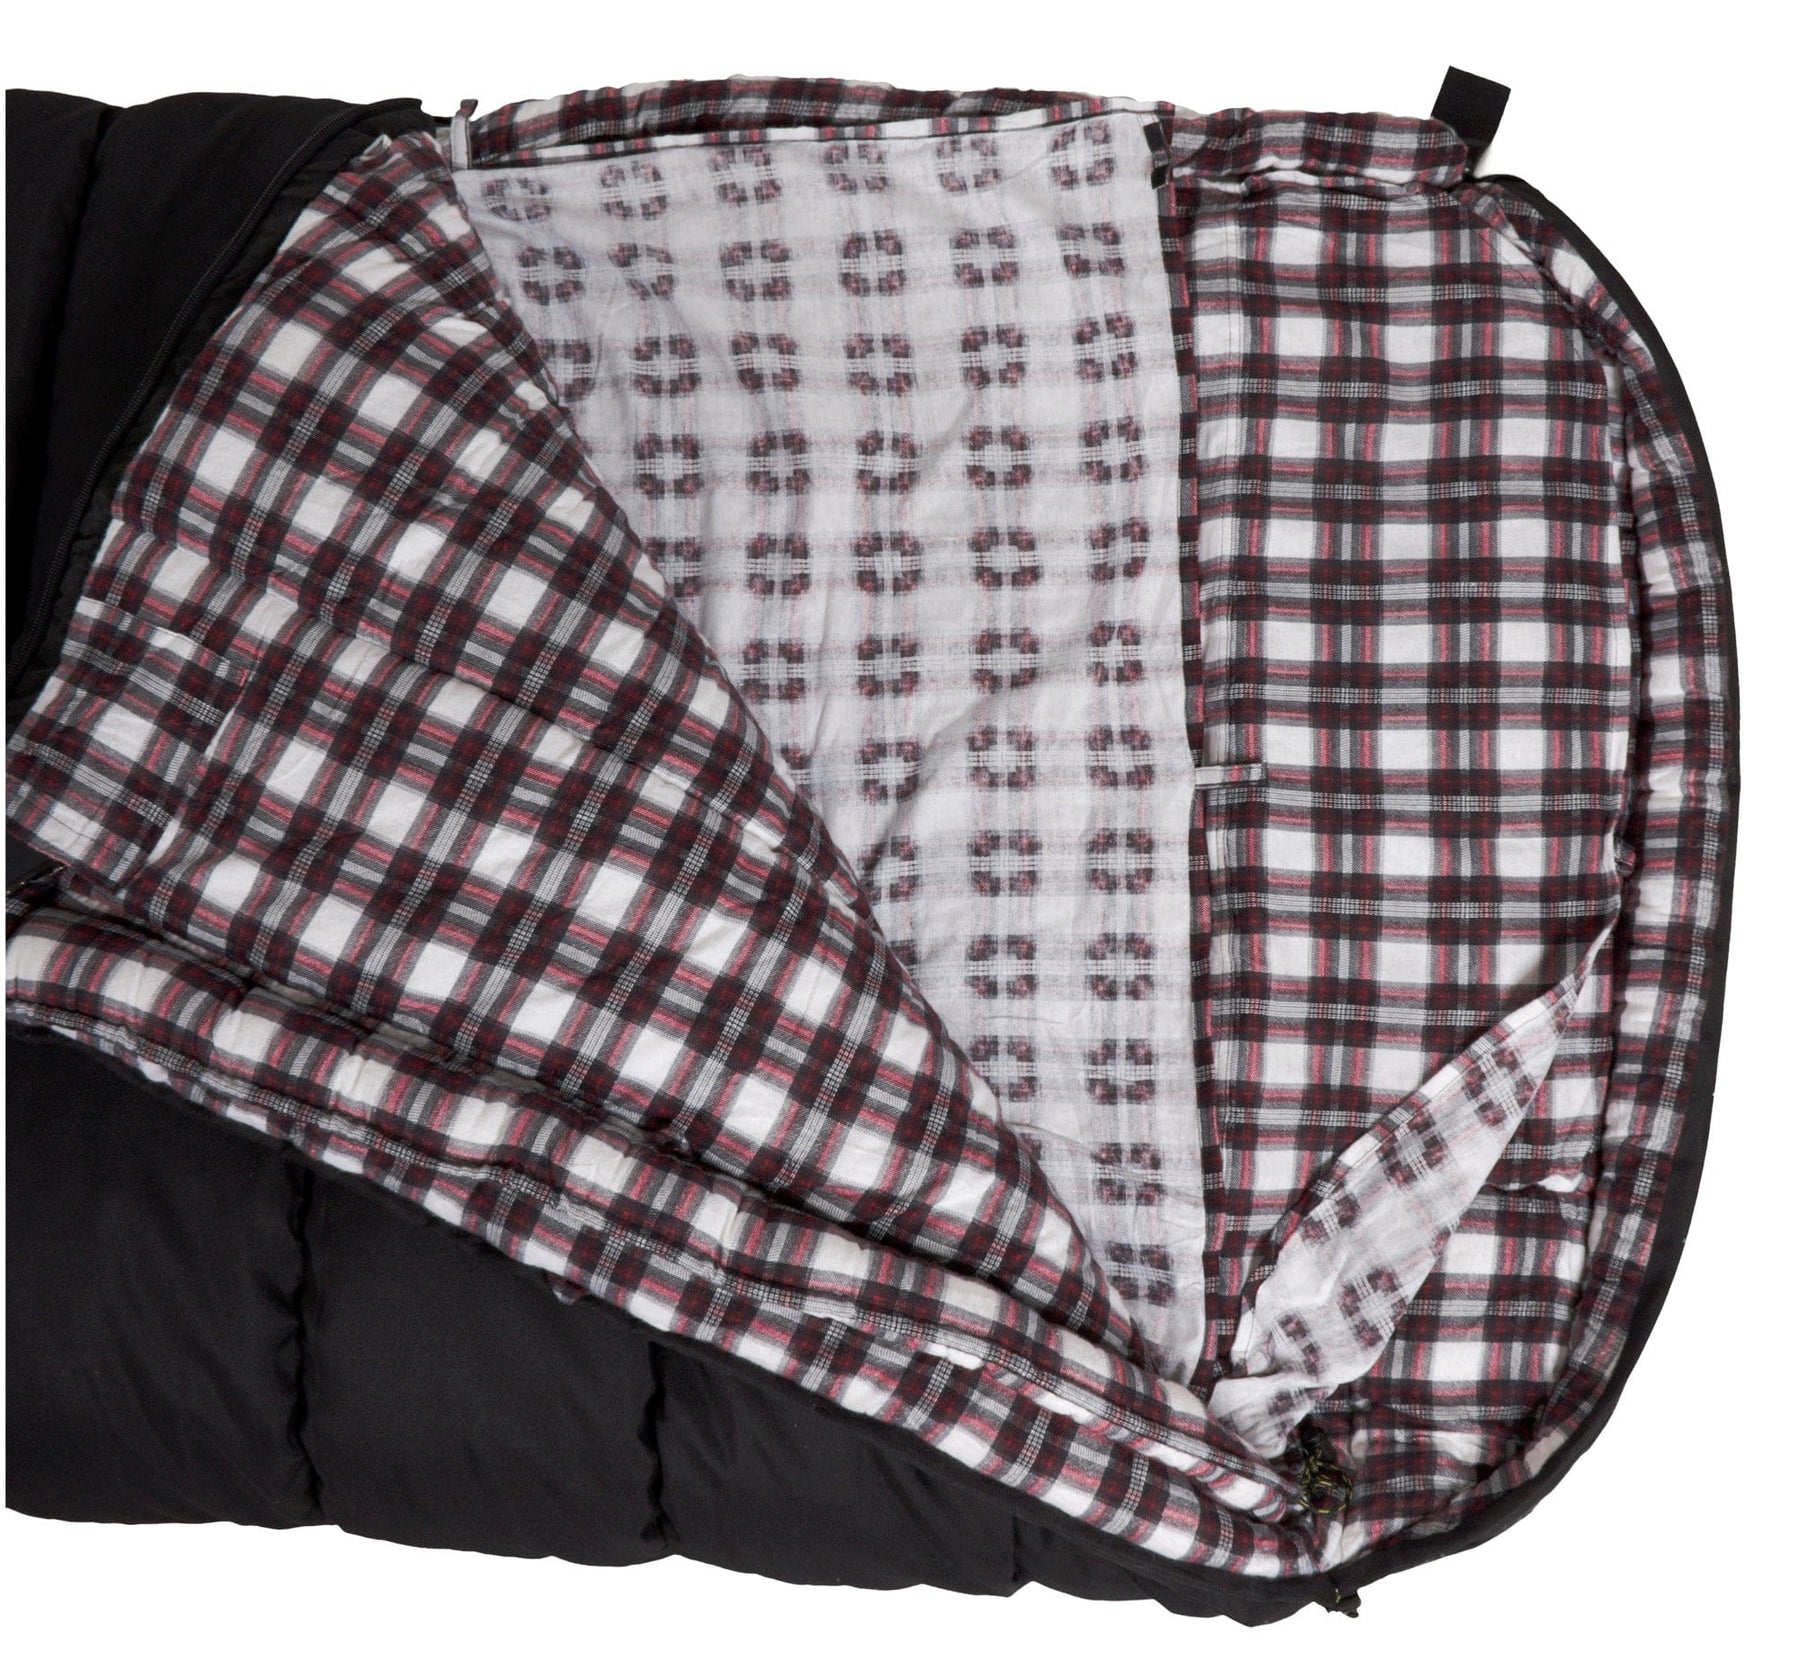 TETON Sports Outfitter XXL -35˚F Canvas Sleeping Bag